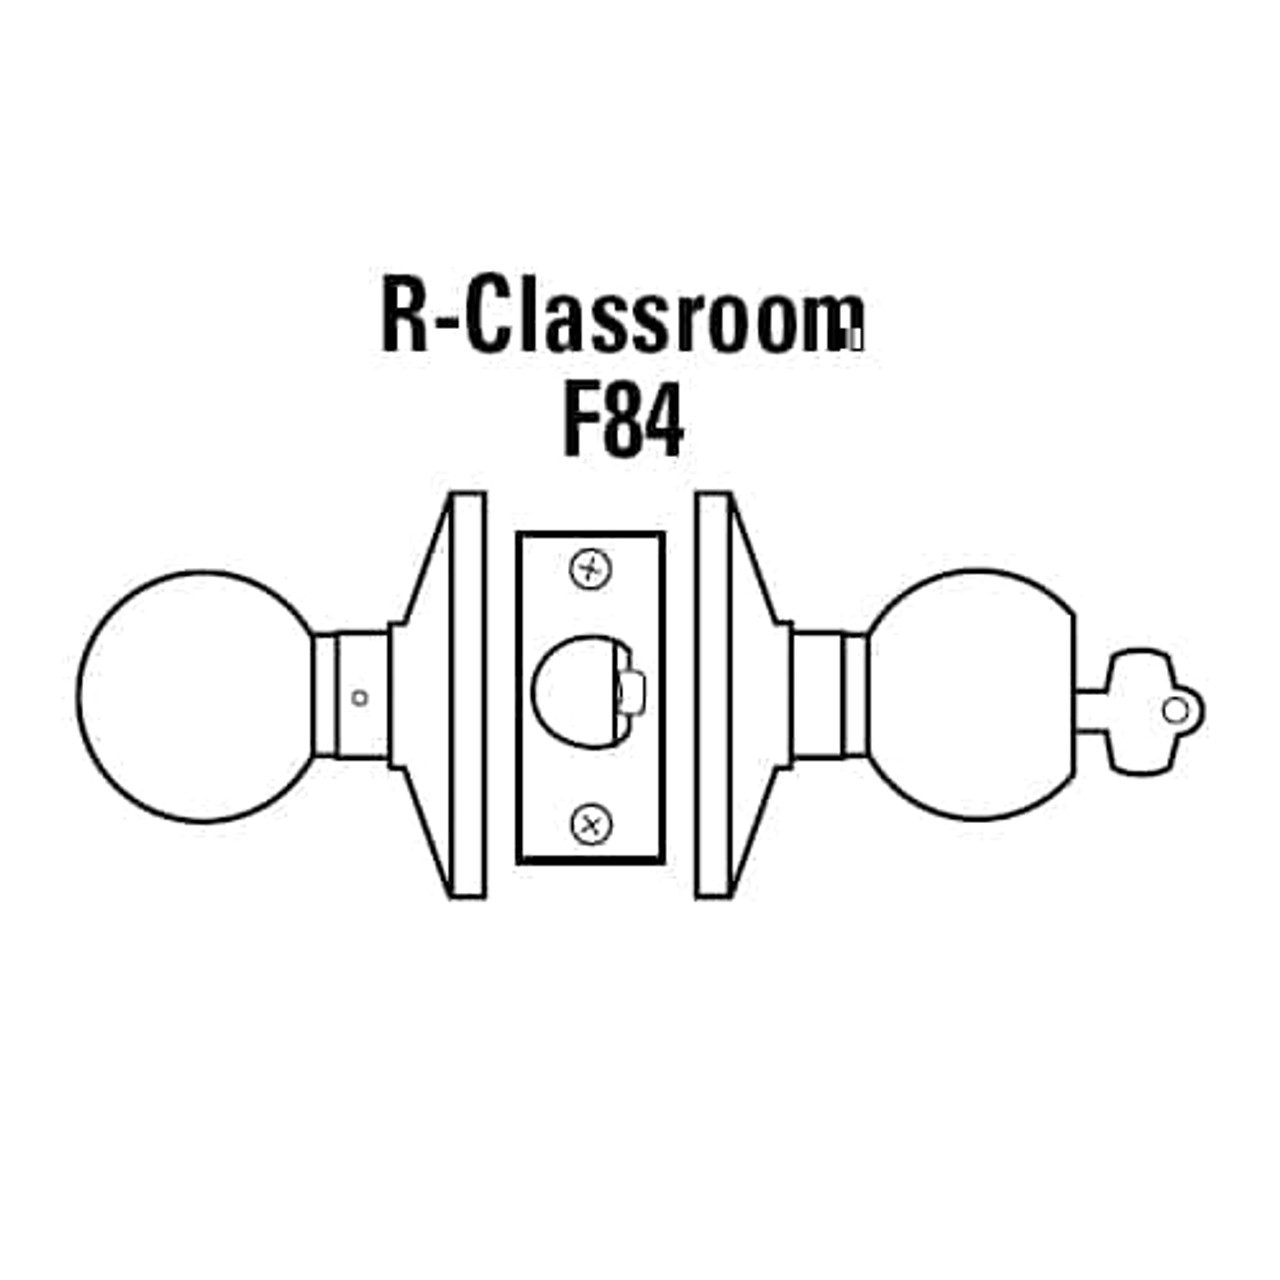 6K27R4CSTK611 Best 6K Series Medium Duty Classroom Cylindrical Knob Locks with Round Style in Bright Bronze